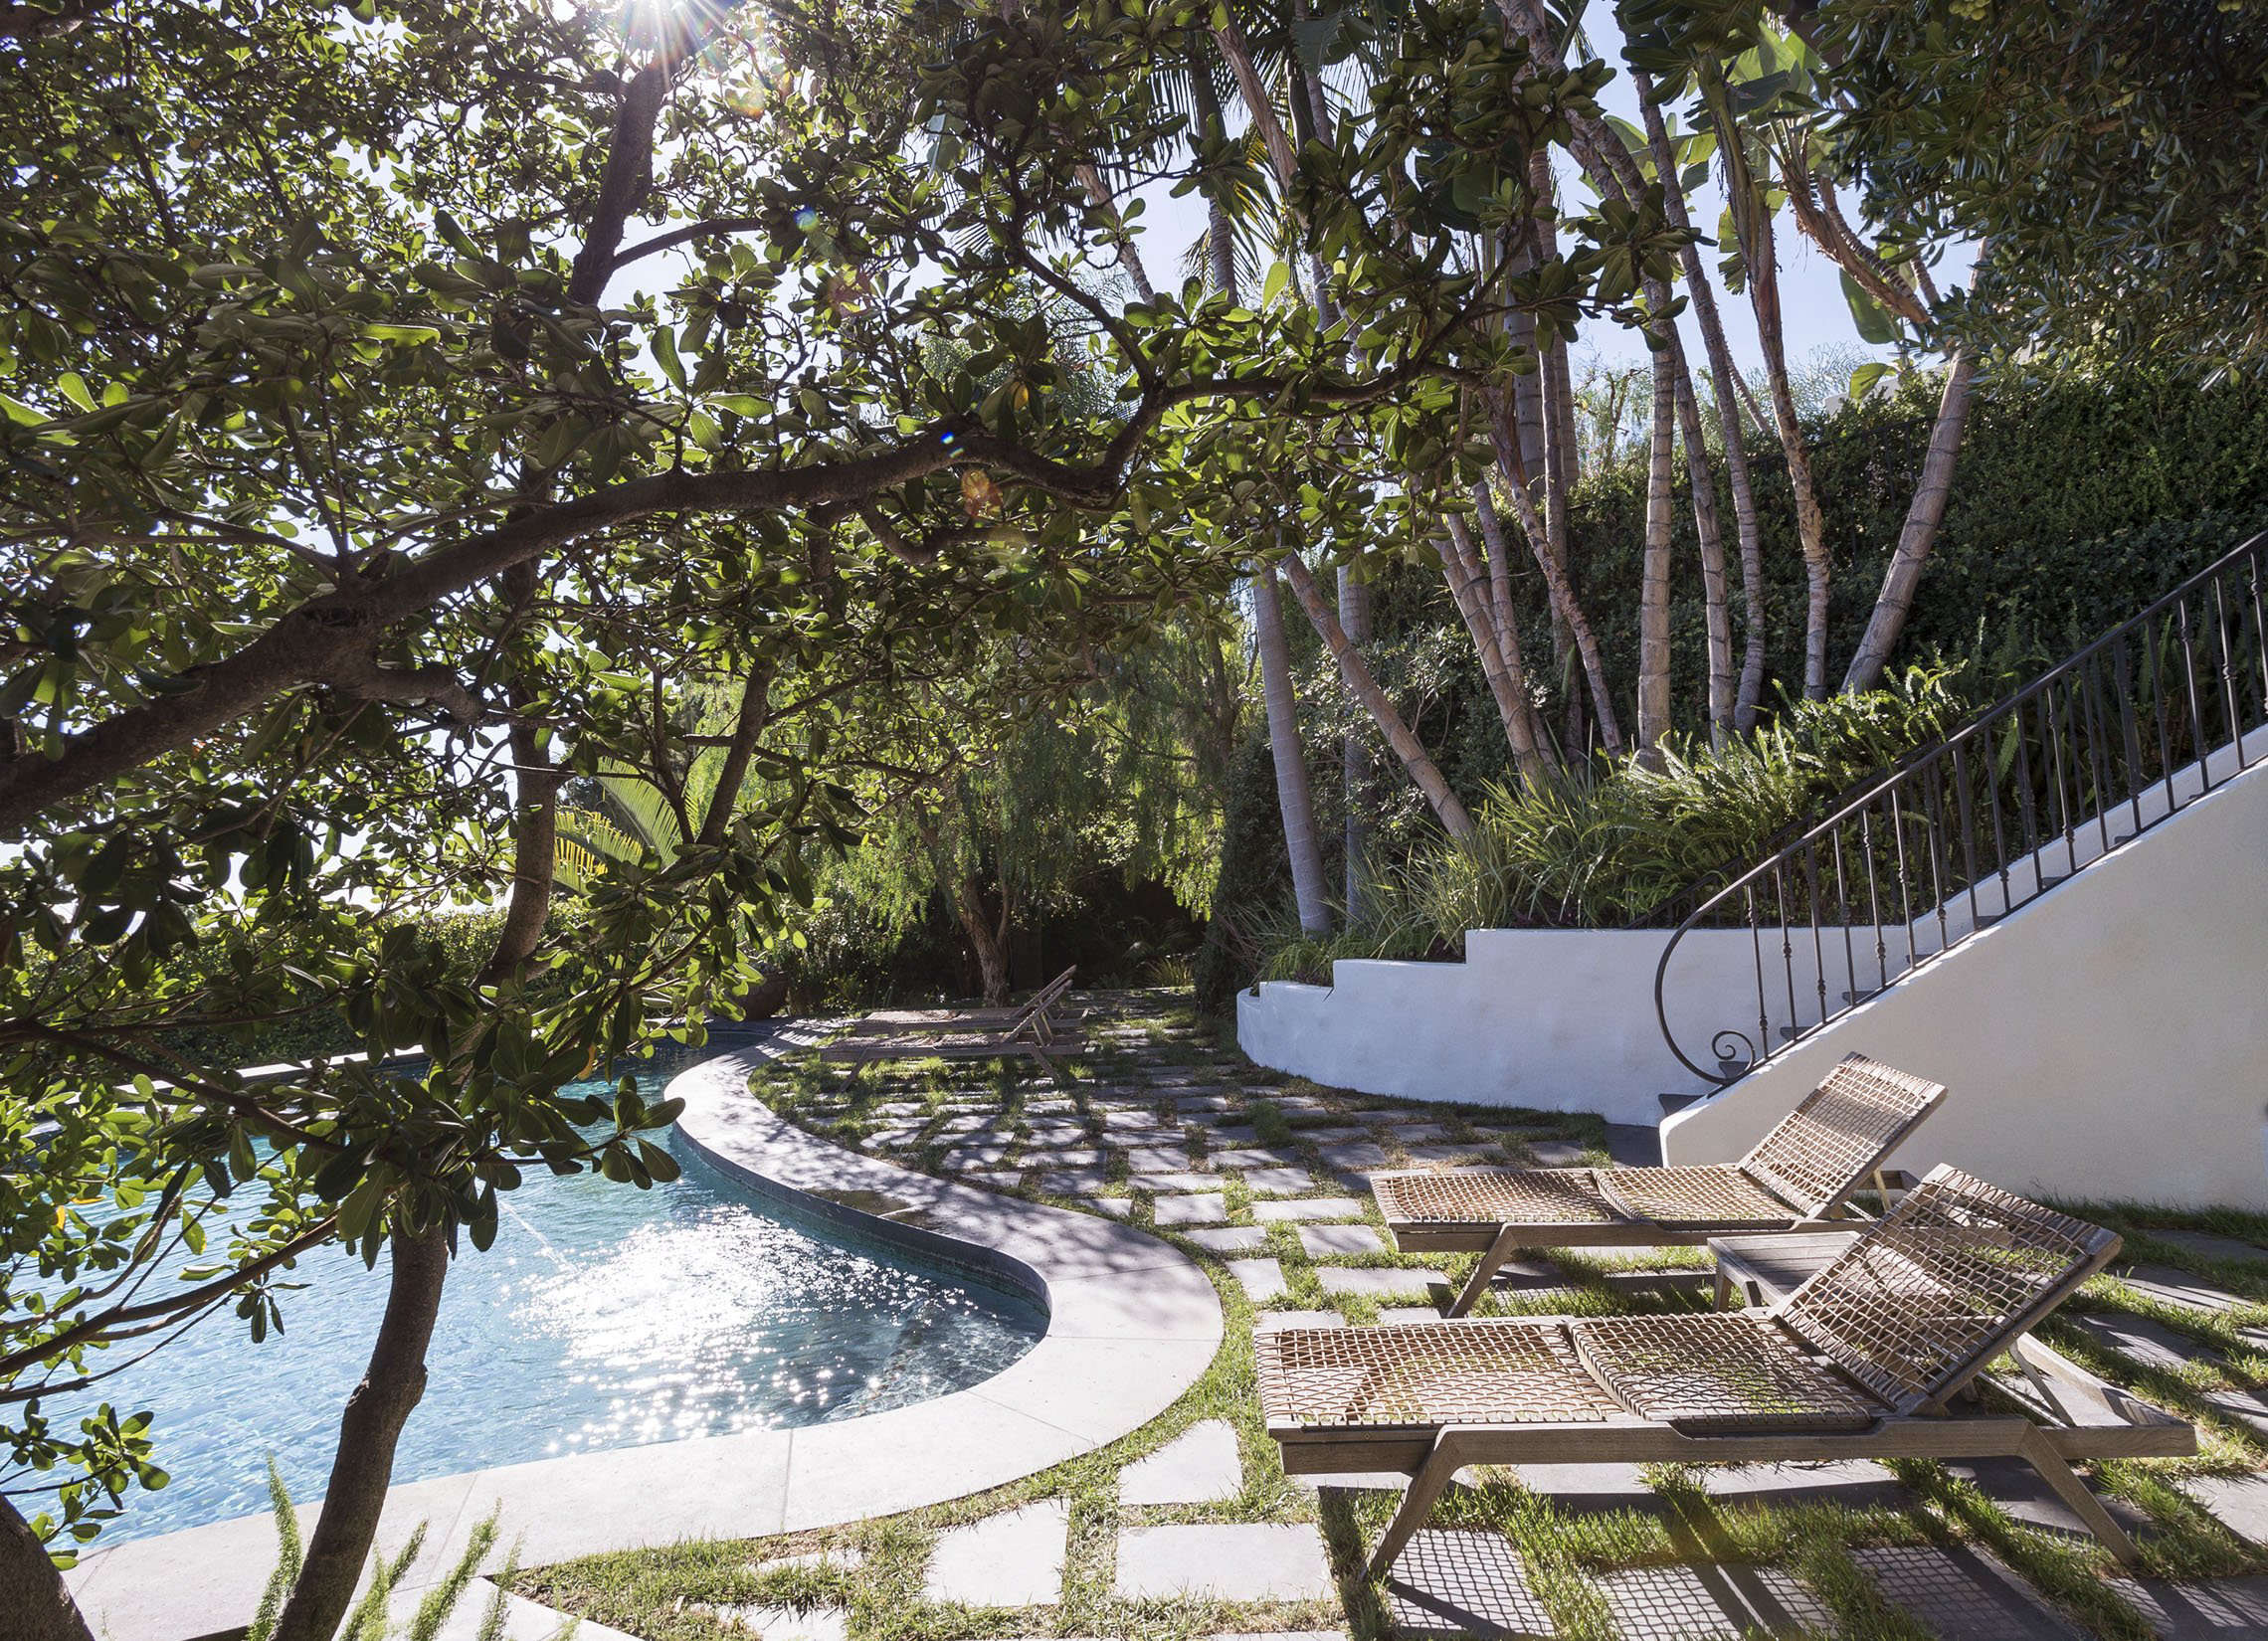 Garden Design For A Swimming Pool Area, Matthew Brown Landscape Design Los Angeles